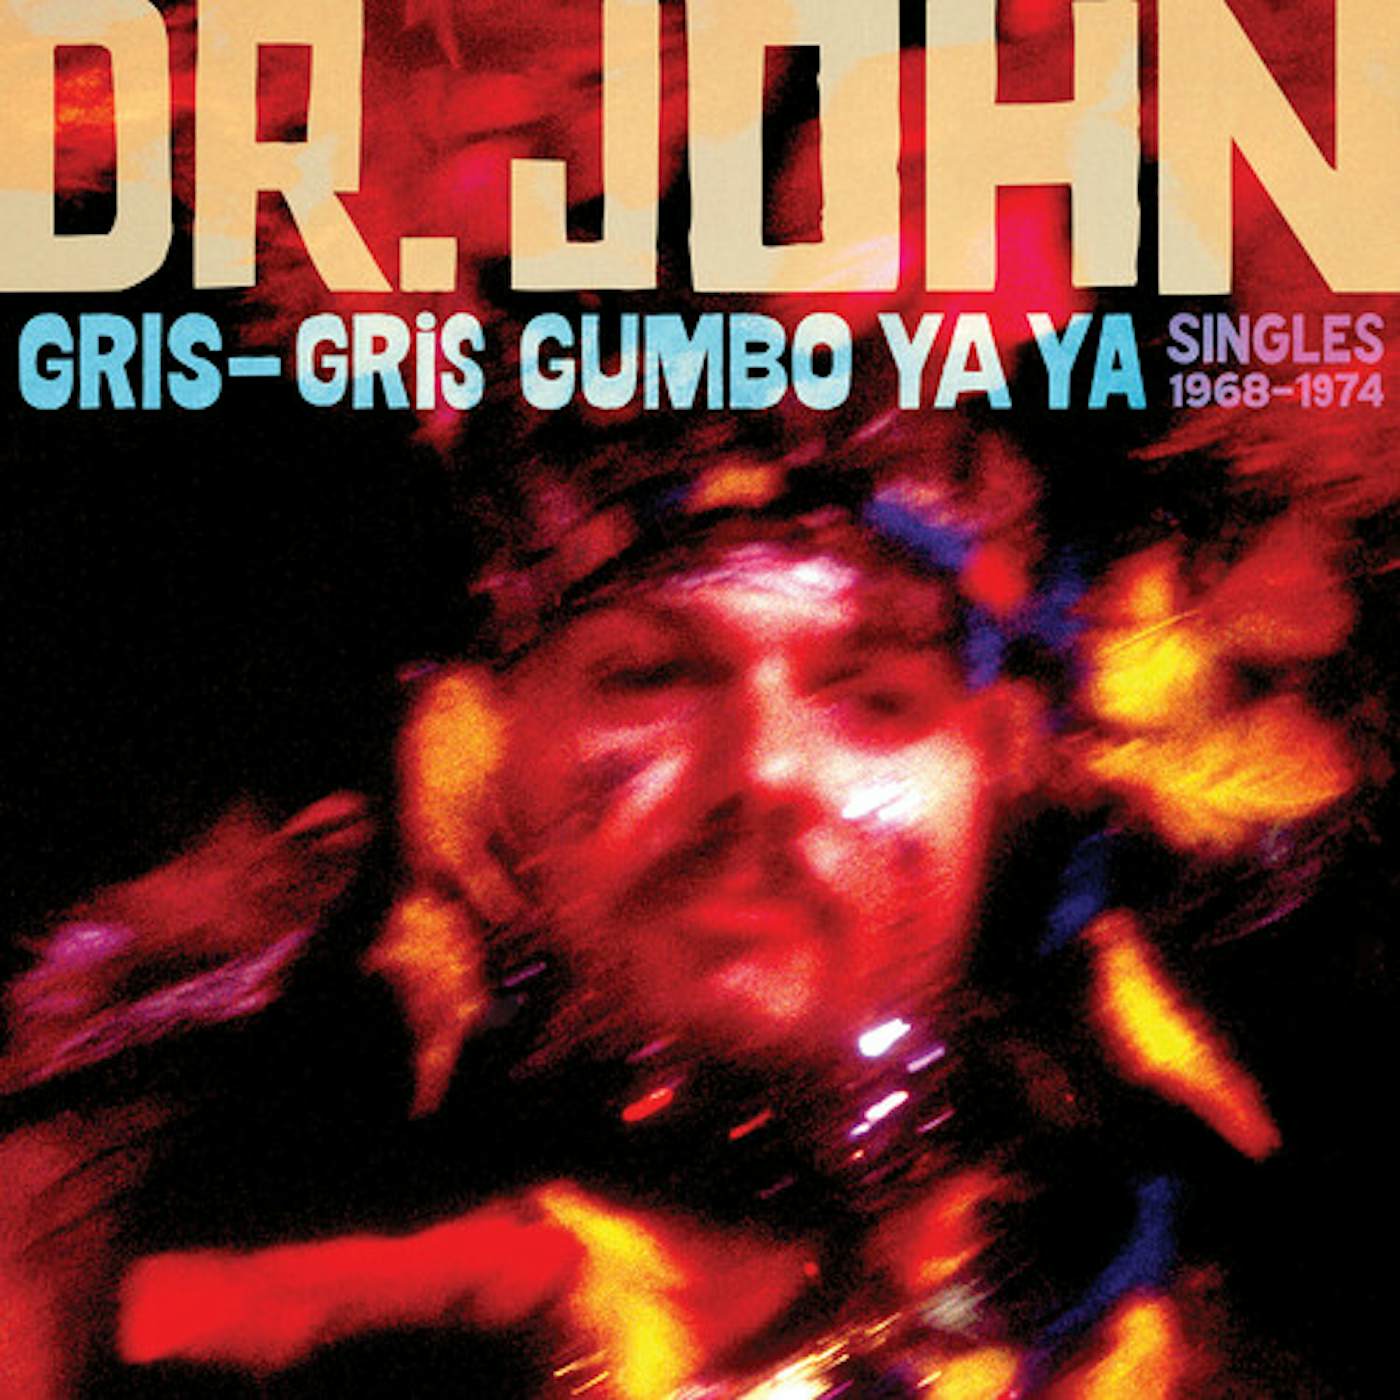 Dr. John GRIS-GRIS GUMBO YA YA: SINGLES 1968-1974 CD